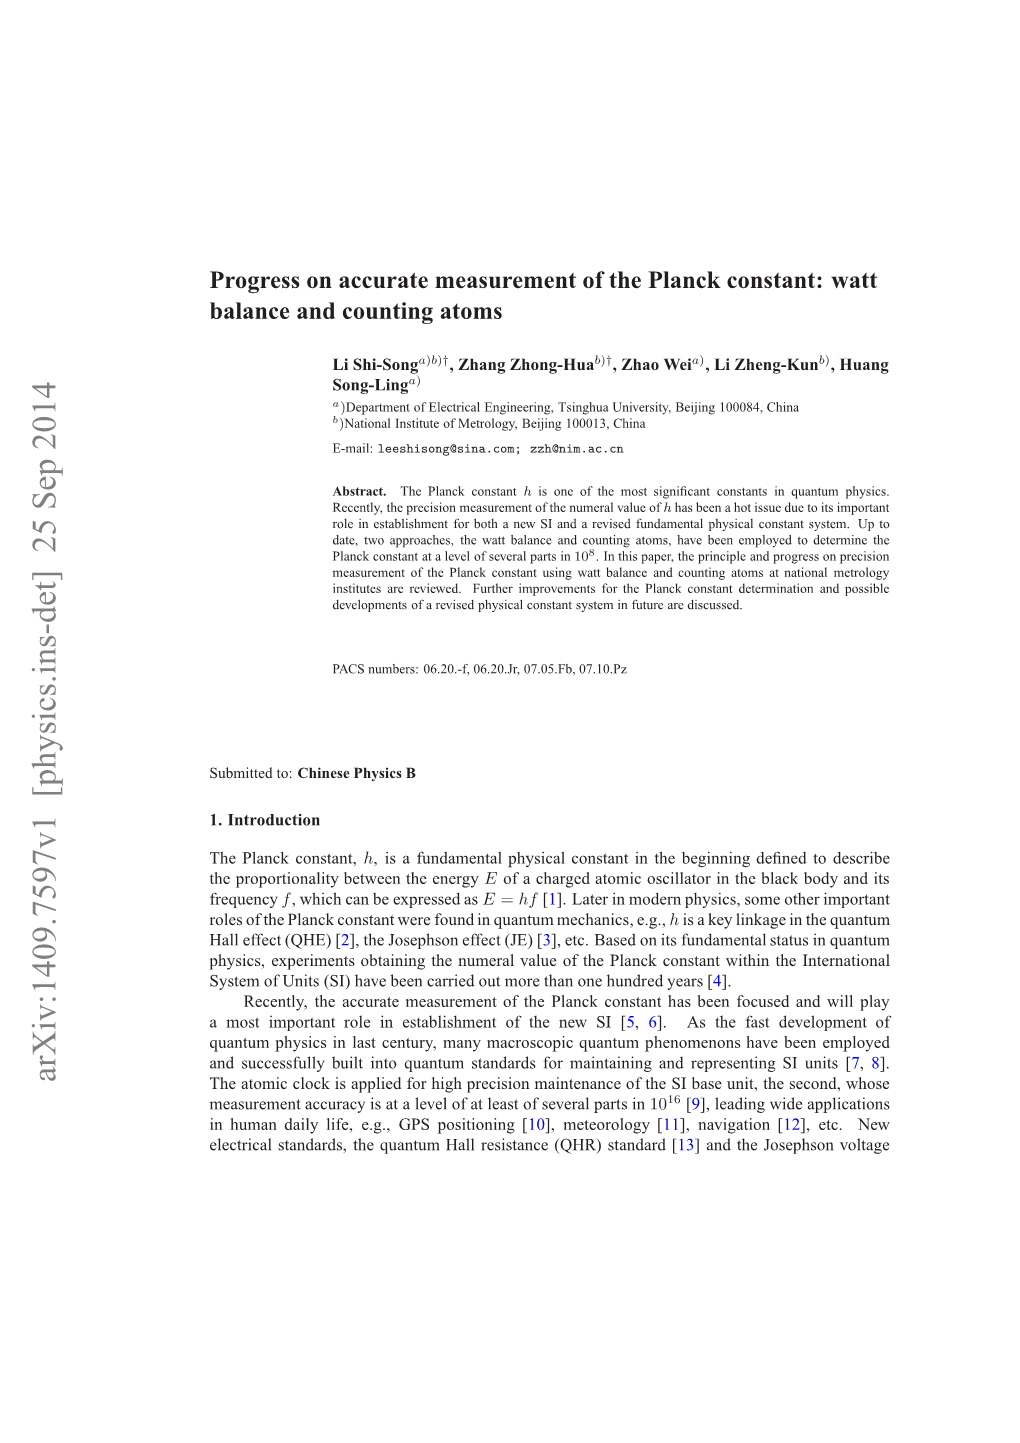 Progress on Accurate Measurement of the Planck Constant: Watt Balance